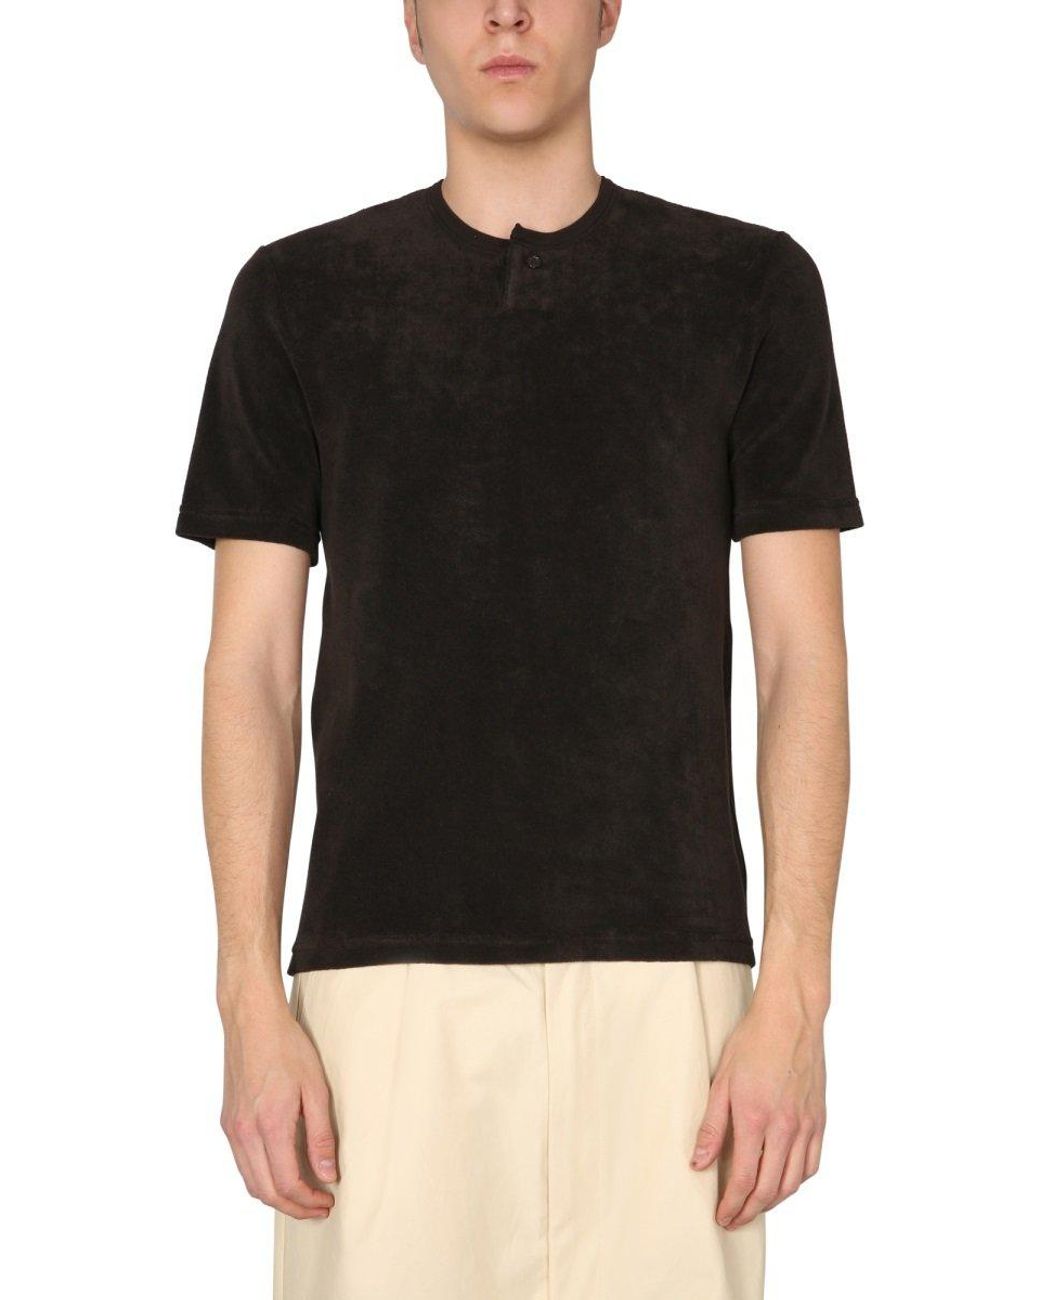 Bottega Veneta Cotton Regular Fit T-shirt in Brown for Men - Lyst